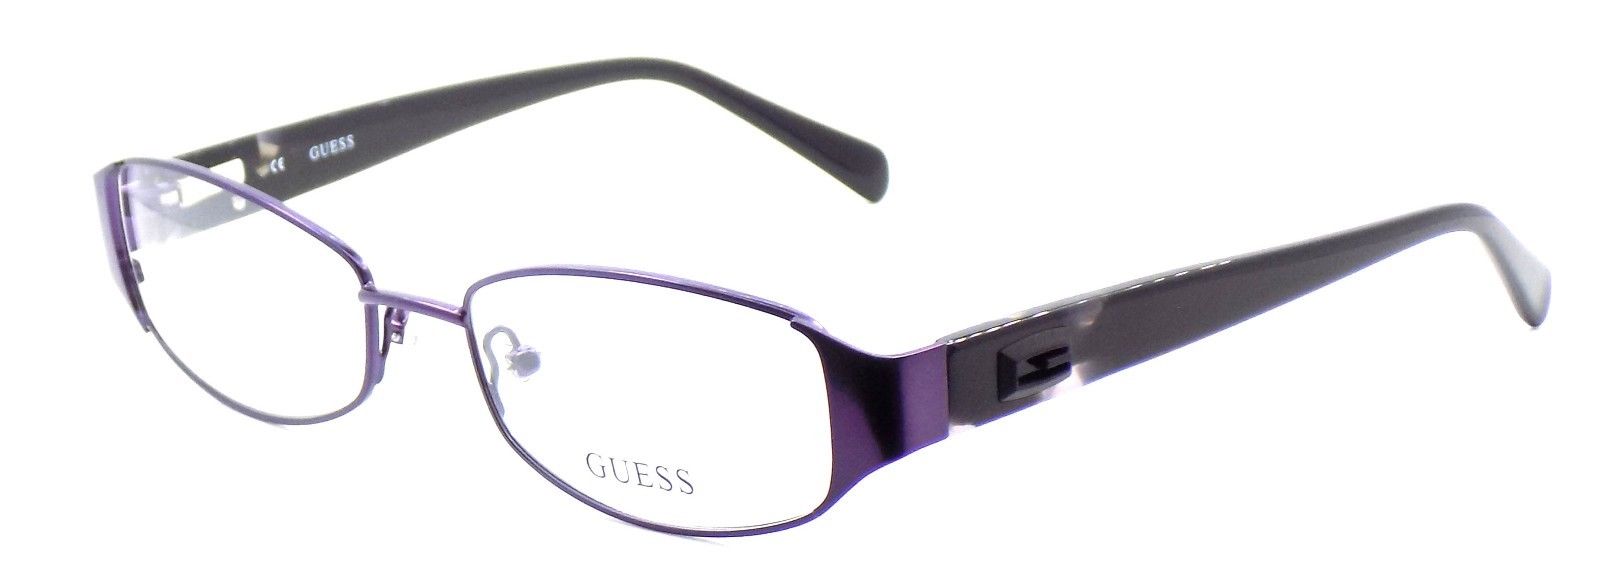 1-GUESS GU2411 PUR Women's Eyeglasses Frames 52-17-135 Purple + CASE-715583959897-IKSpecs